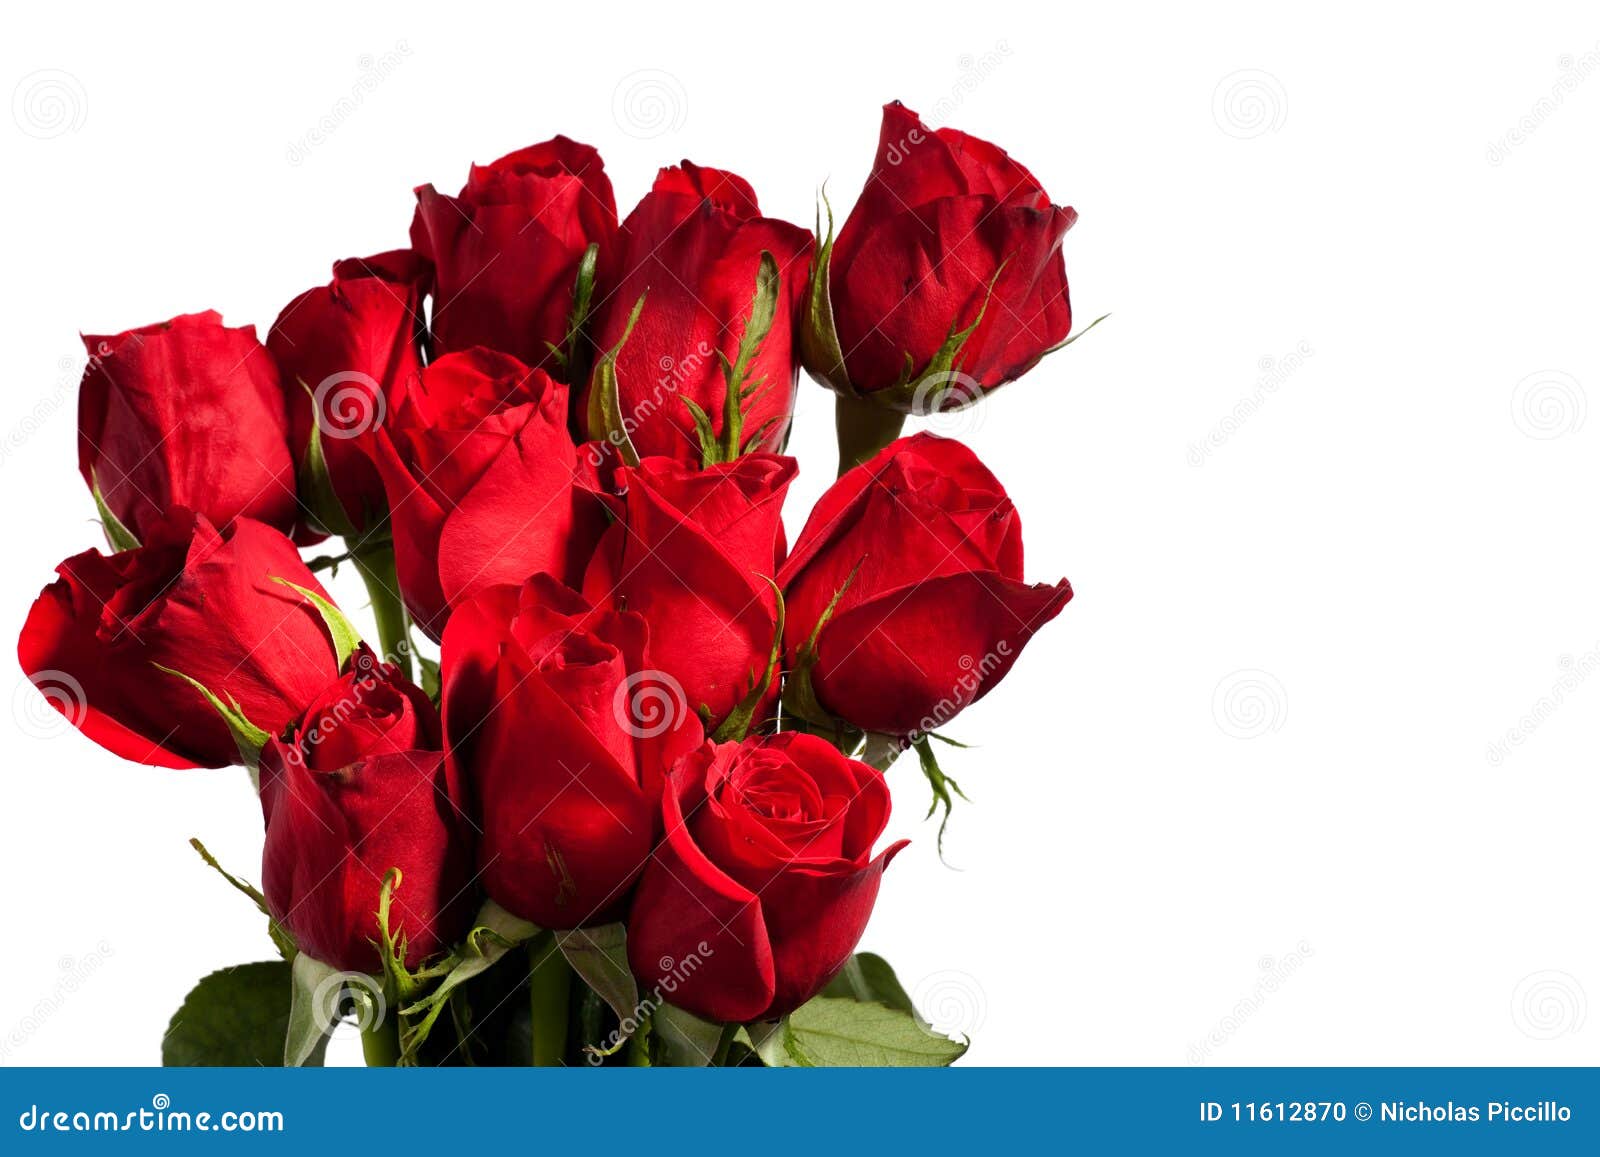 Dozen Red Roses stock photo. Image of nature, beauty - 11612870